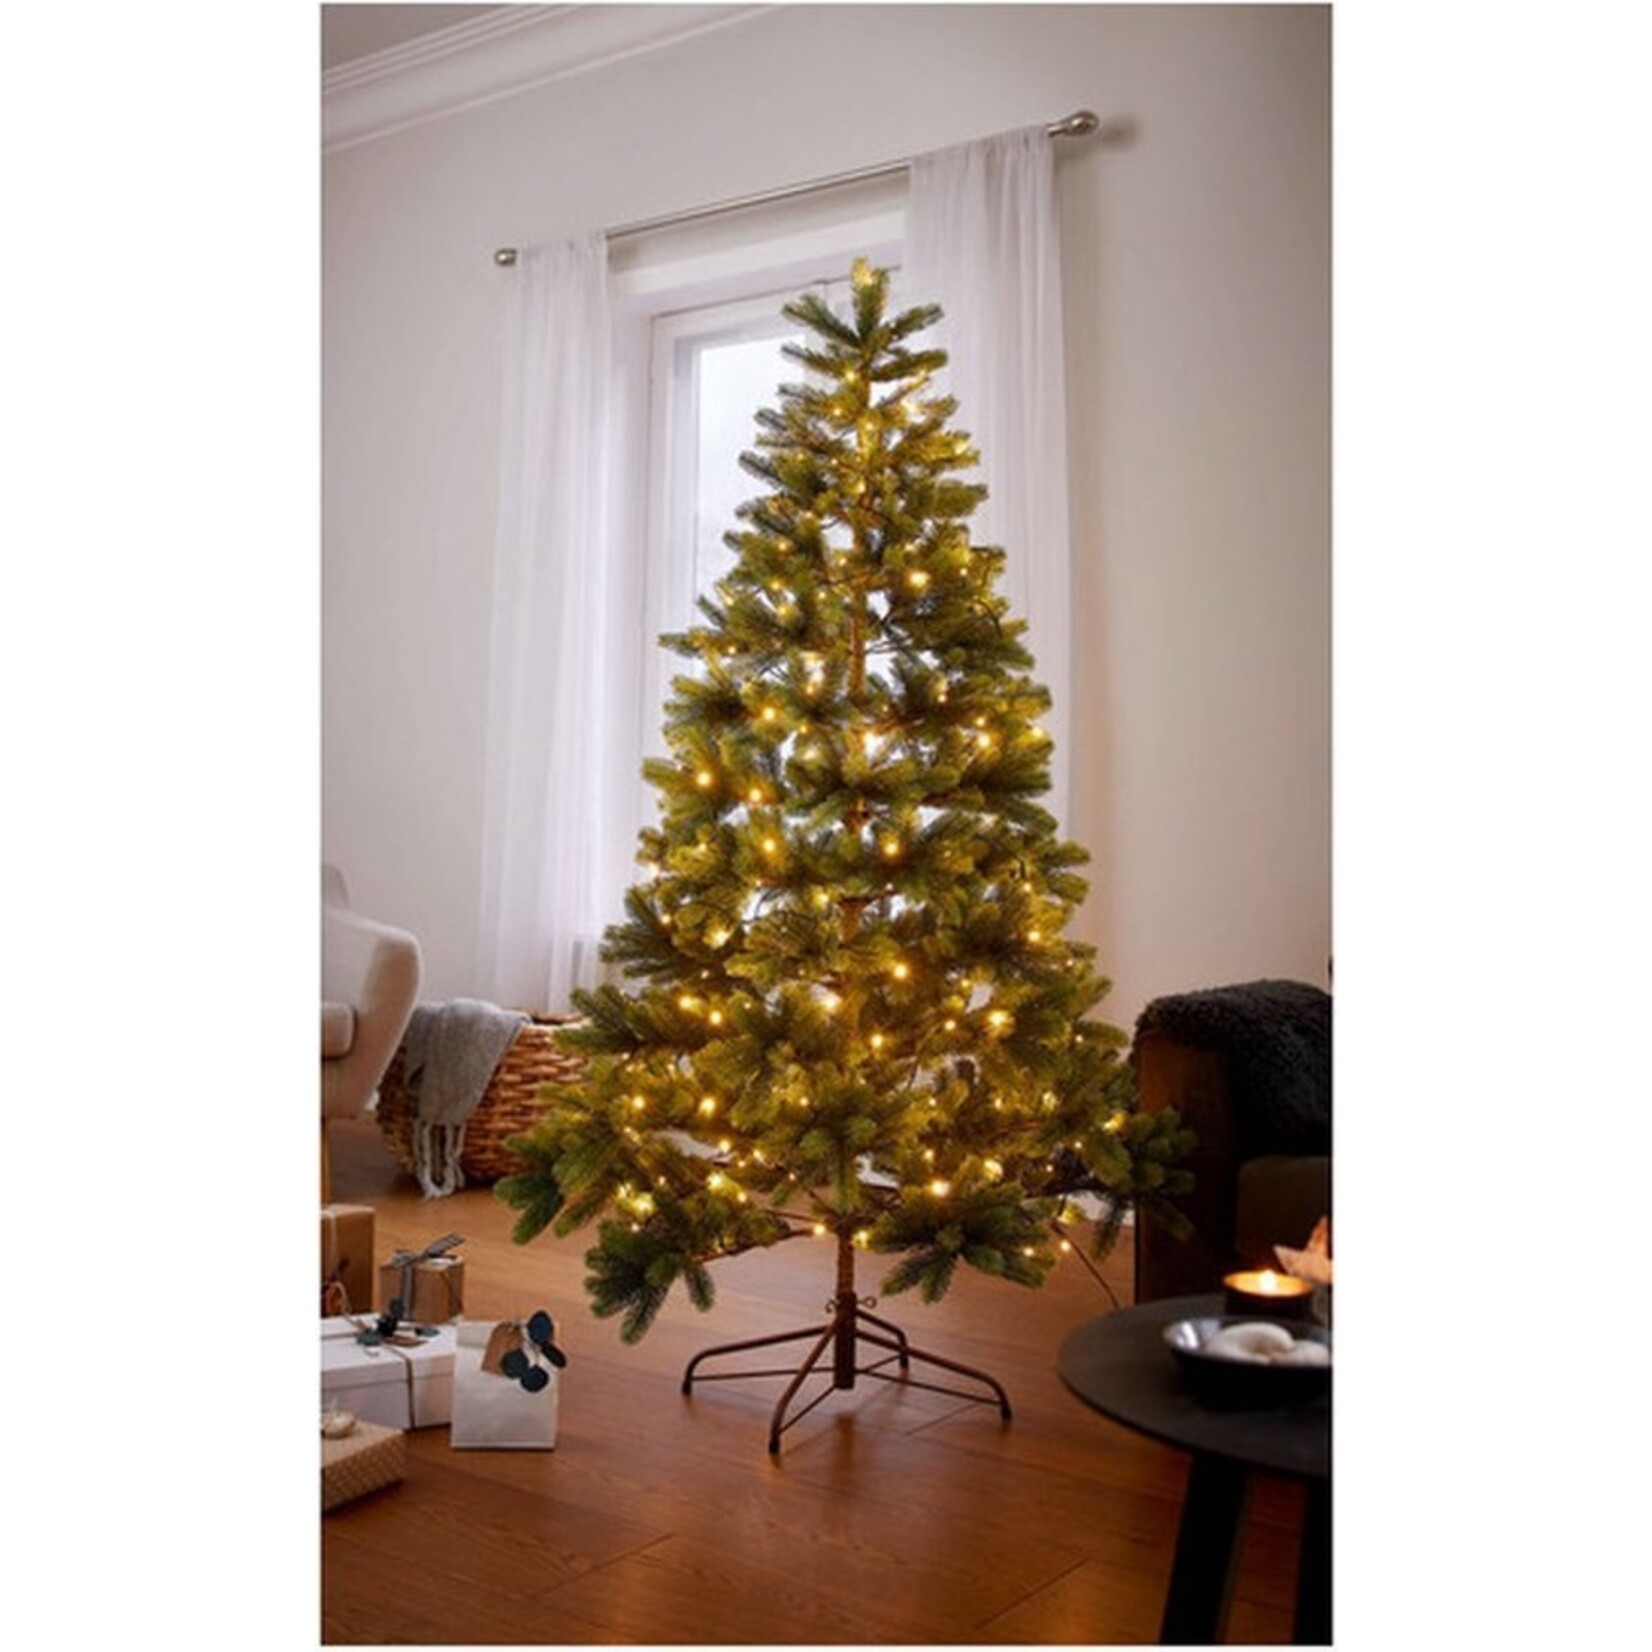 AG Kerstboom 180 cm - 930 flexibel te vormen takken - zeer dicht takkenstelsel - volle kerstboom